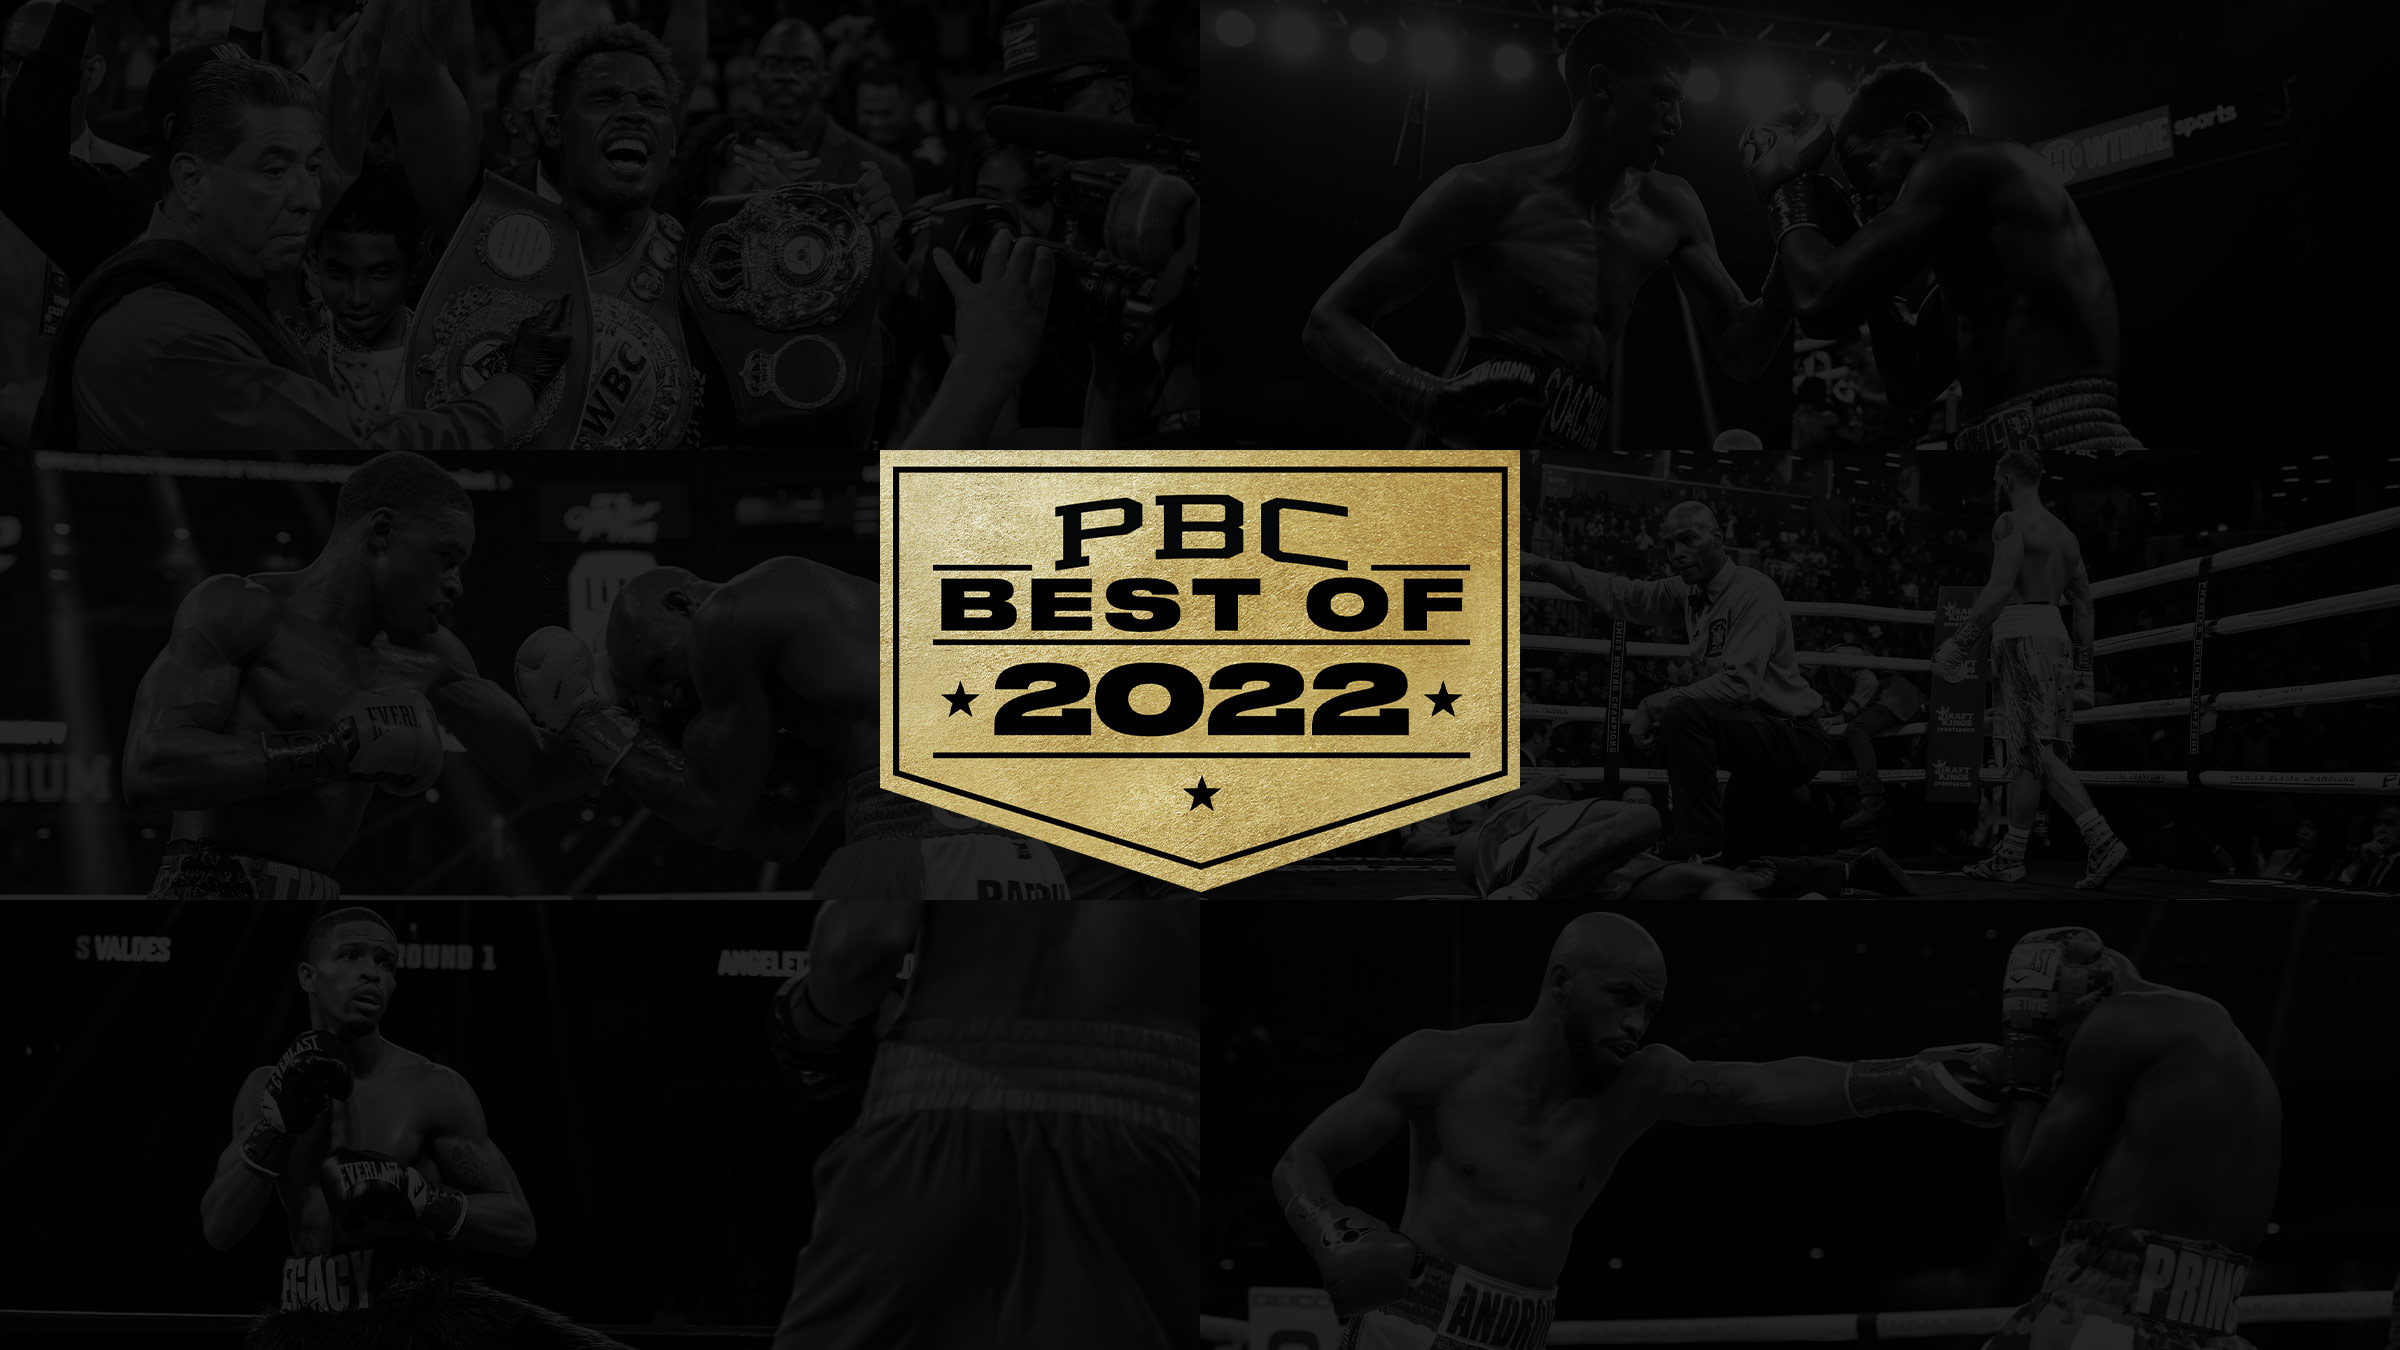 Best of PBC 2022